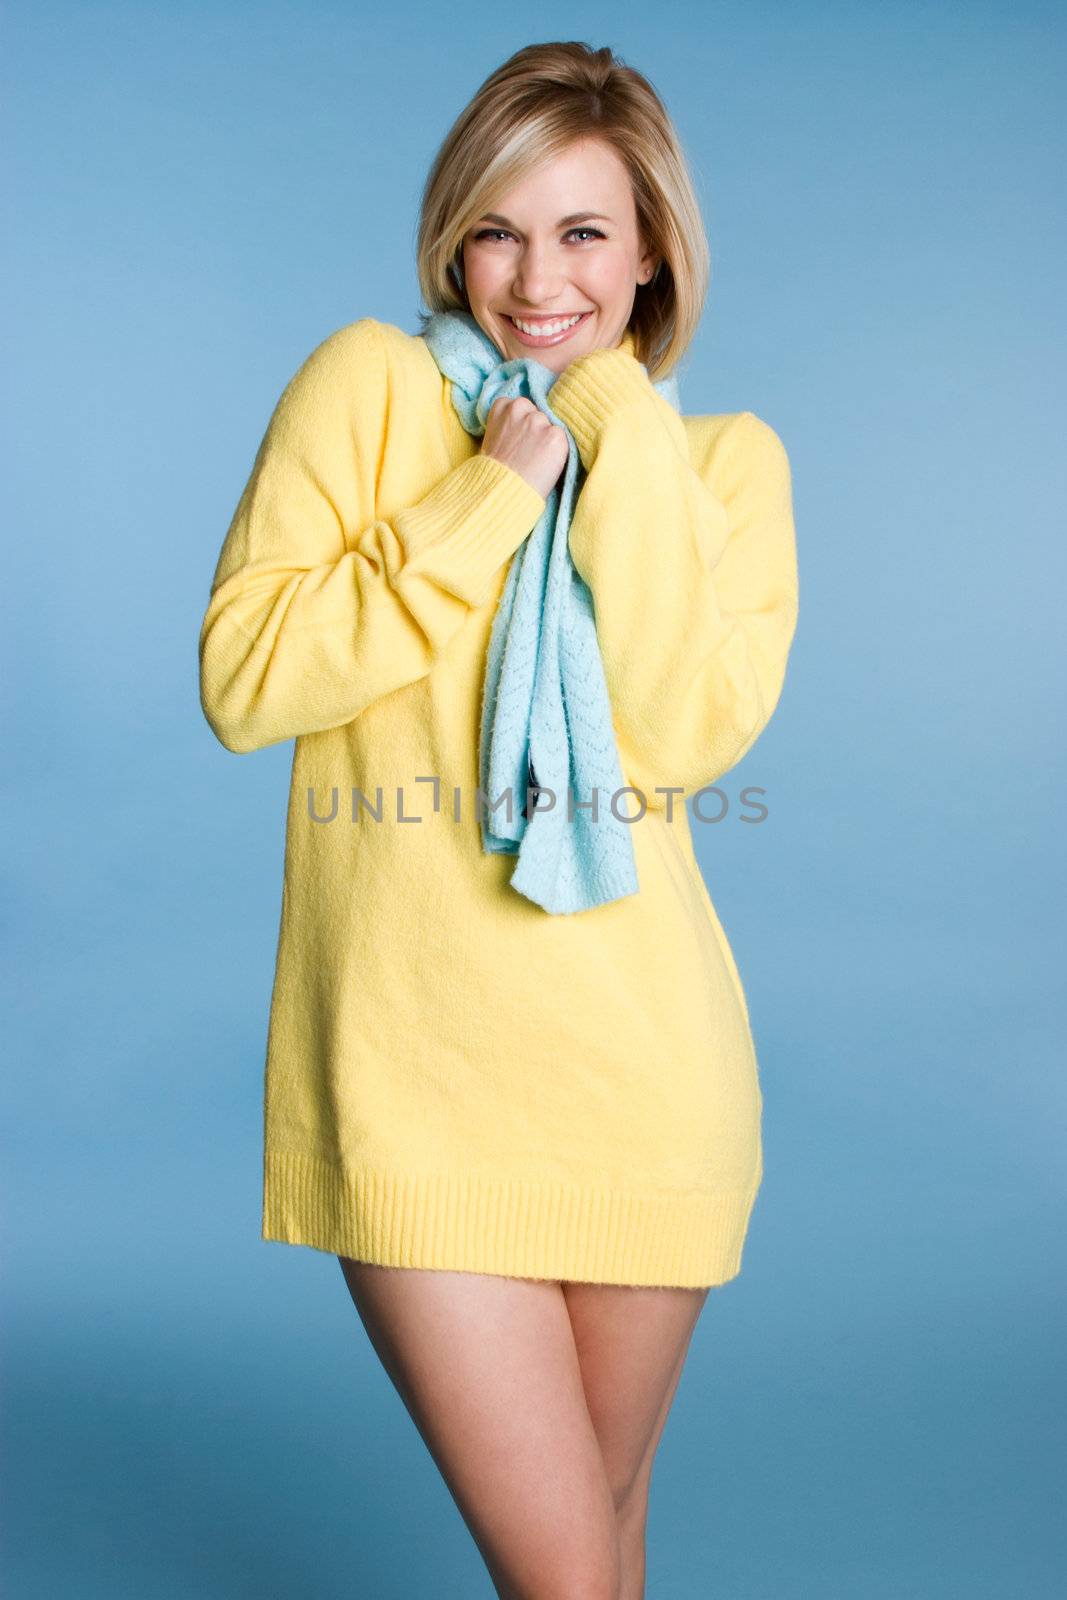 Smiling woman wearing yellow sweater